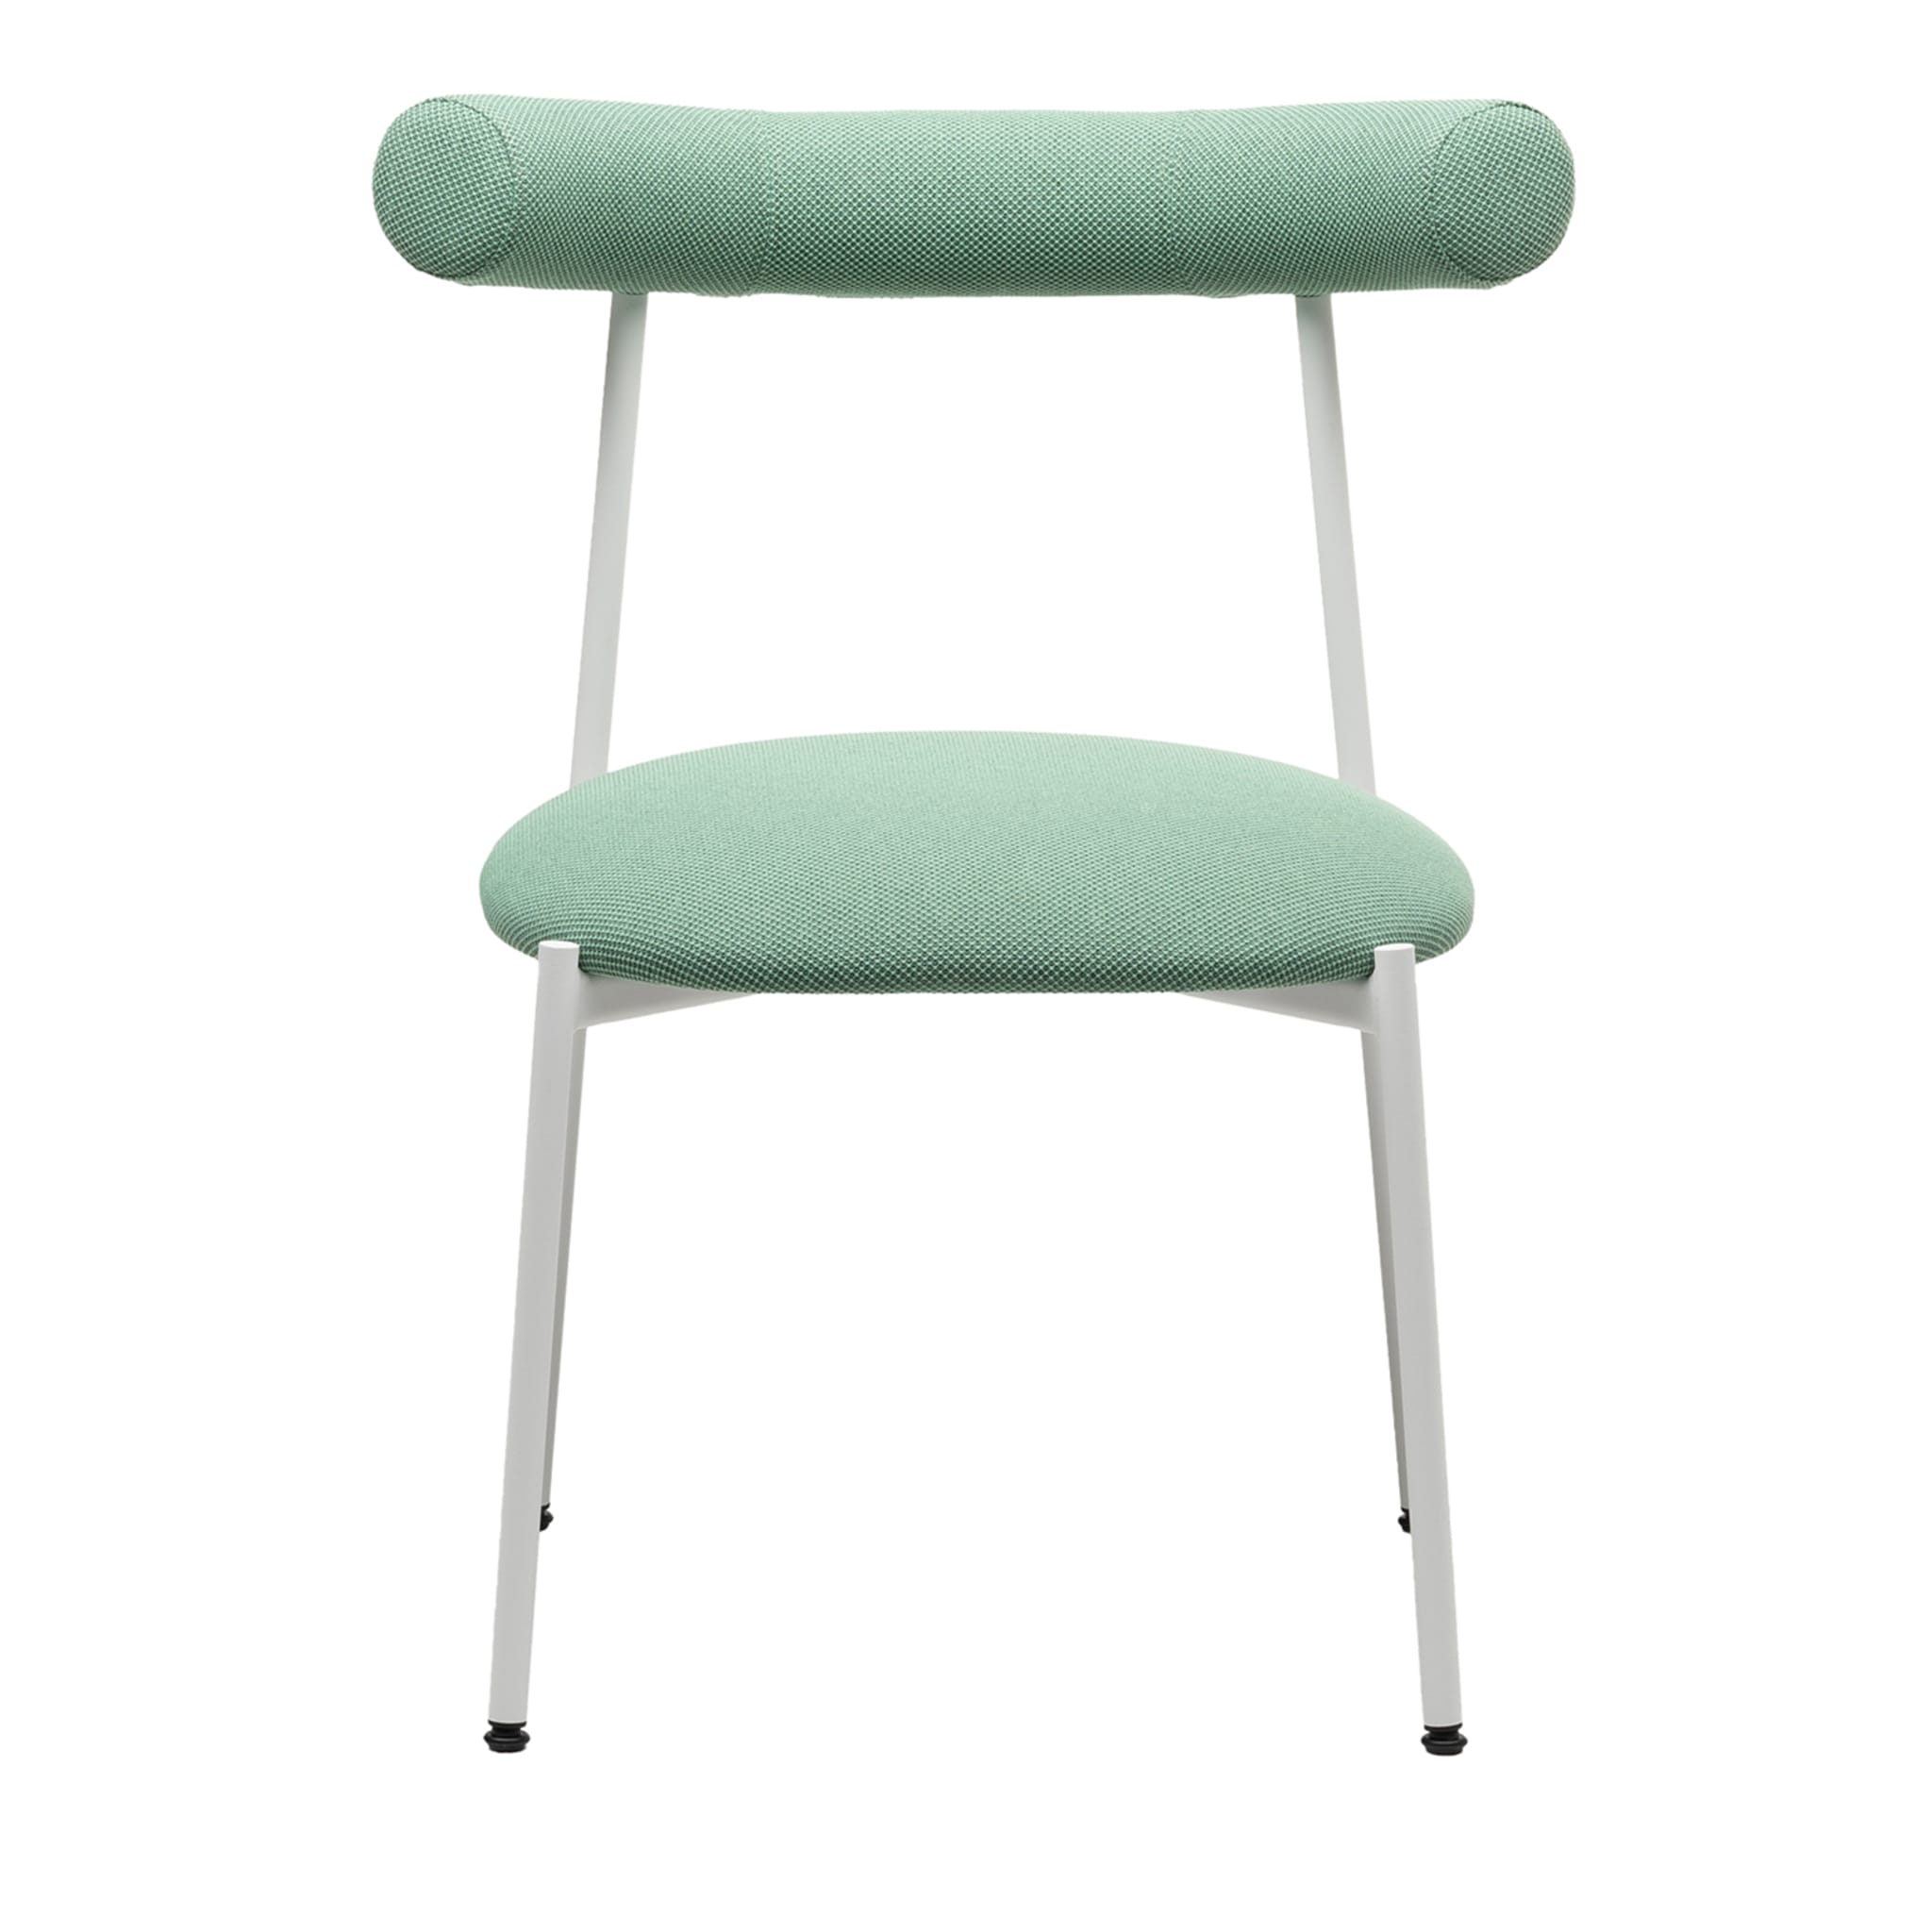 Pampa S Sage-Green & White Chair by Studio Pastina - Main view